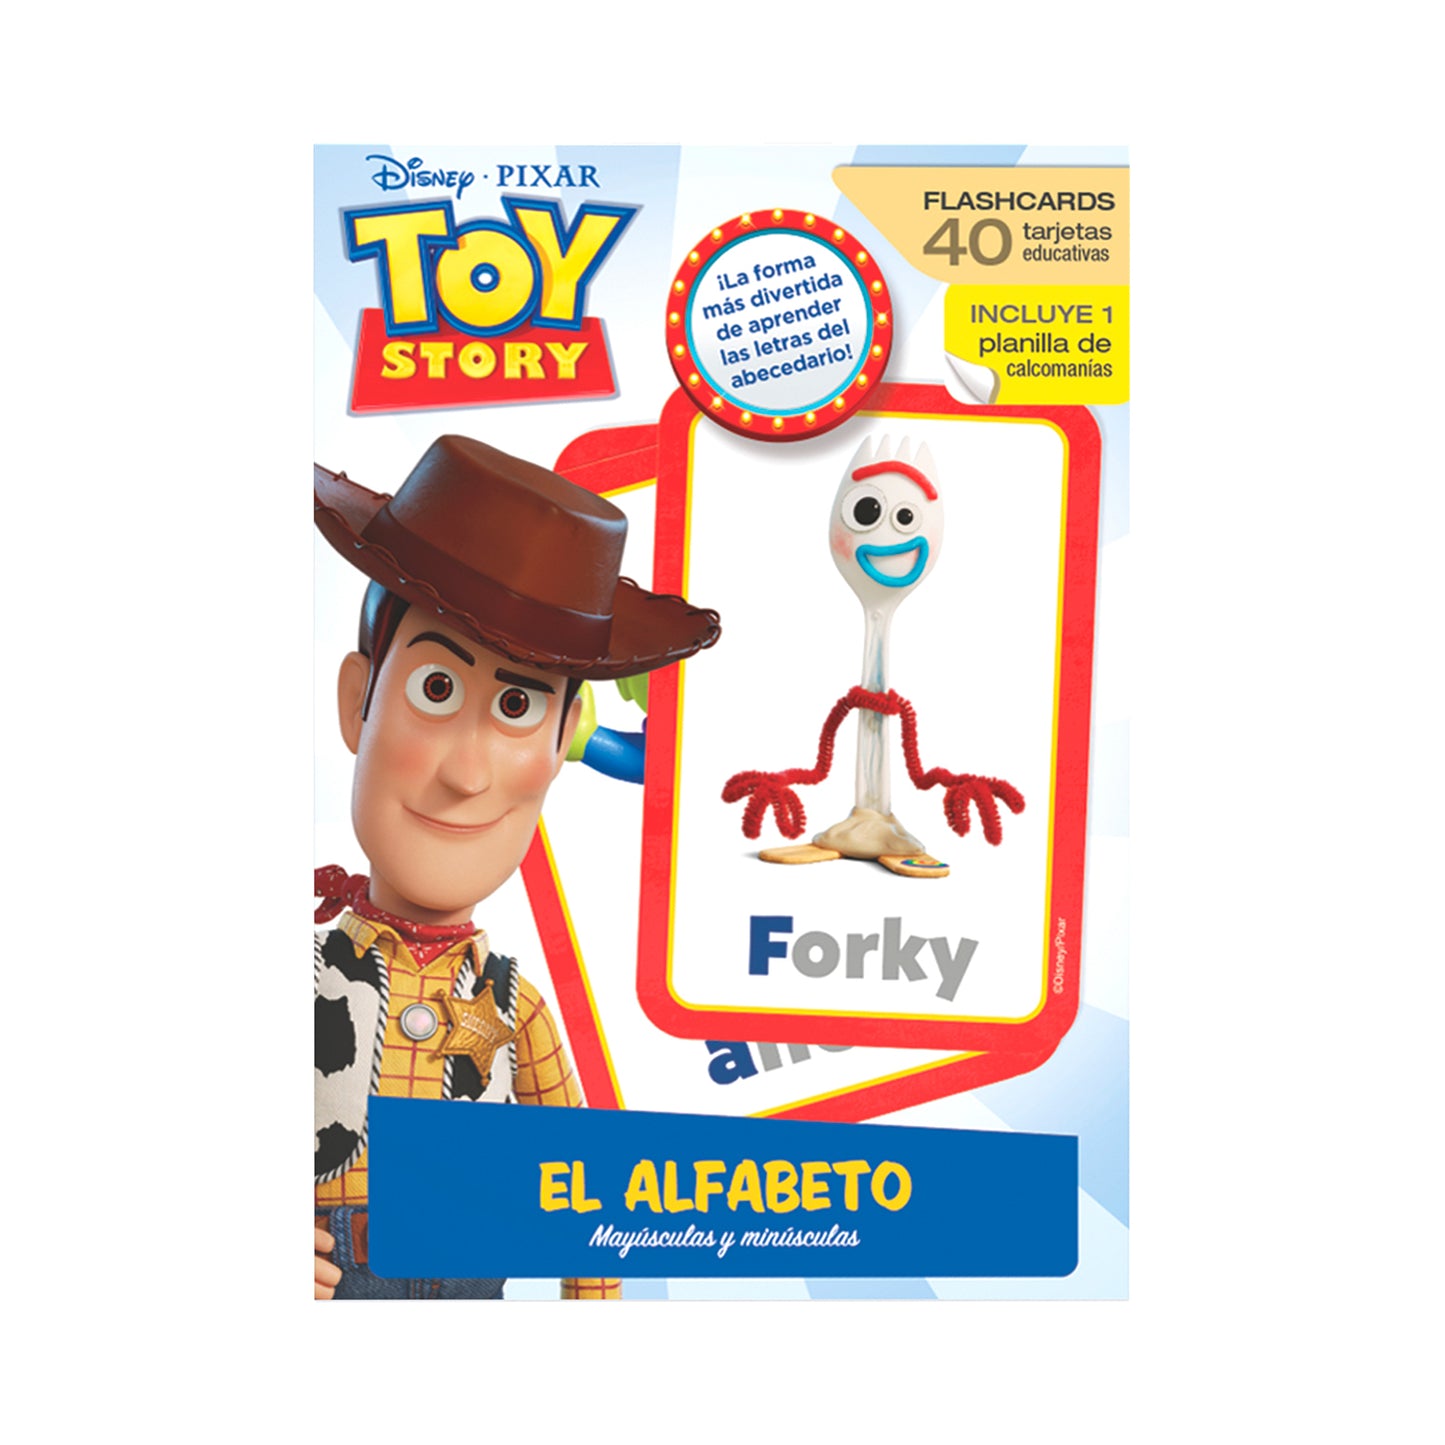 Flashcards Alfabeto Toy Story